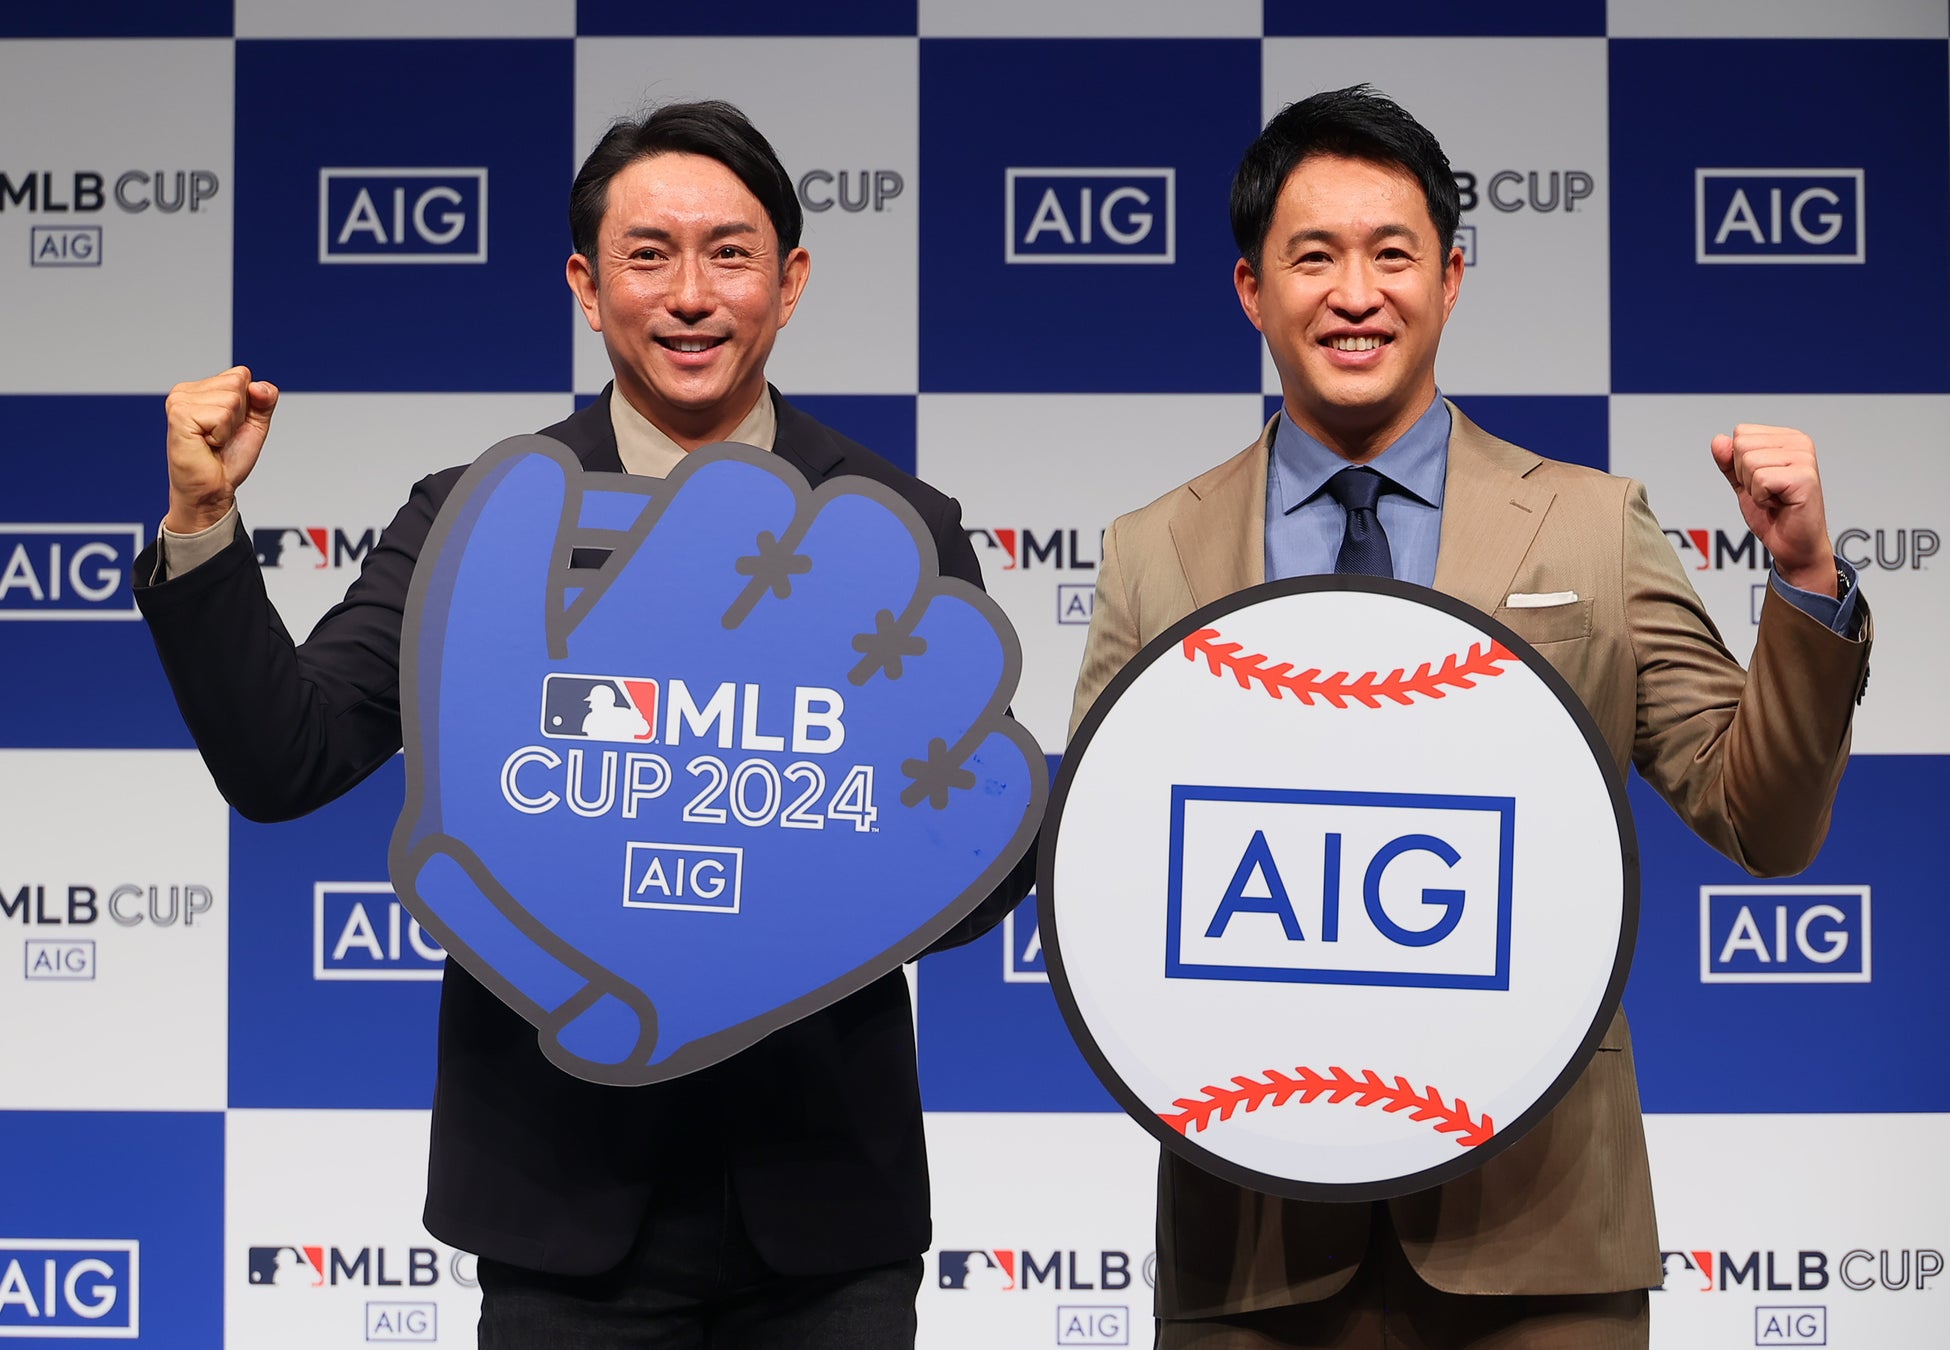 AIGが小学生野球大会をサポート！MLB CUP 2024キックオフイベントレポート